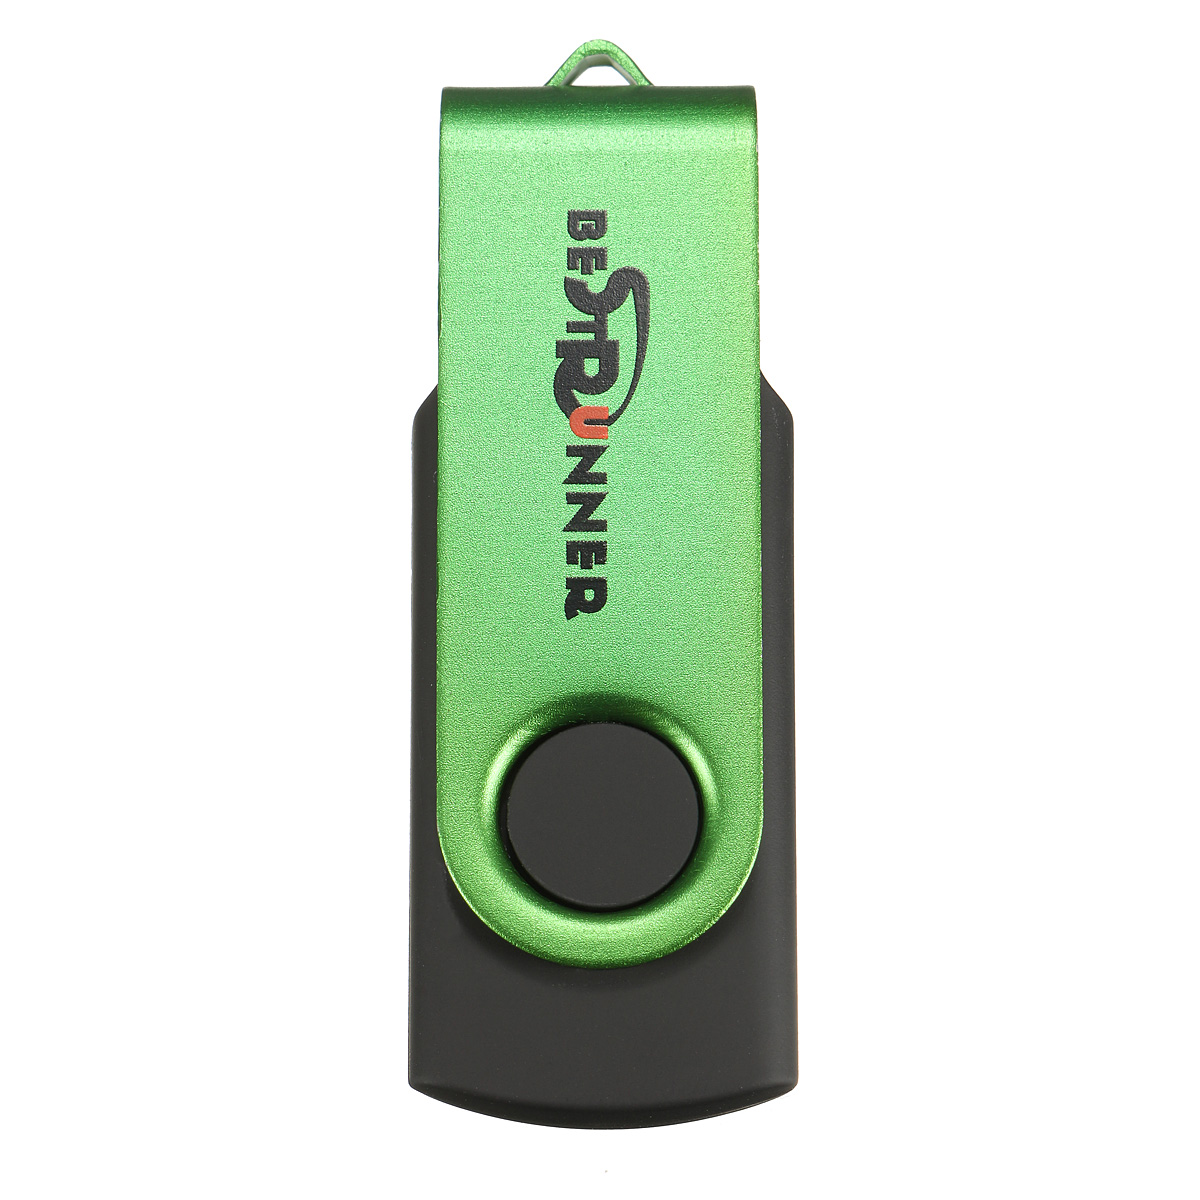 Bestrunner-2GB-USB-20-360deg-Rotation-High-Speed-Flash-Drive-Thumb-Memory-U-Disk-1783060-8